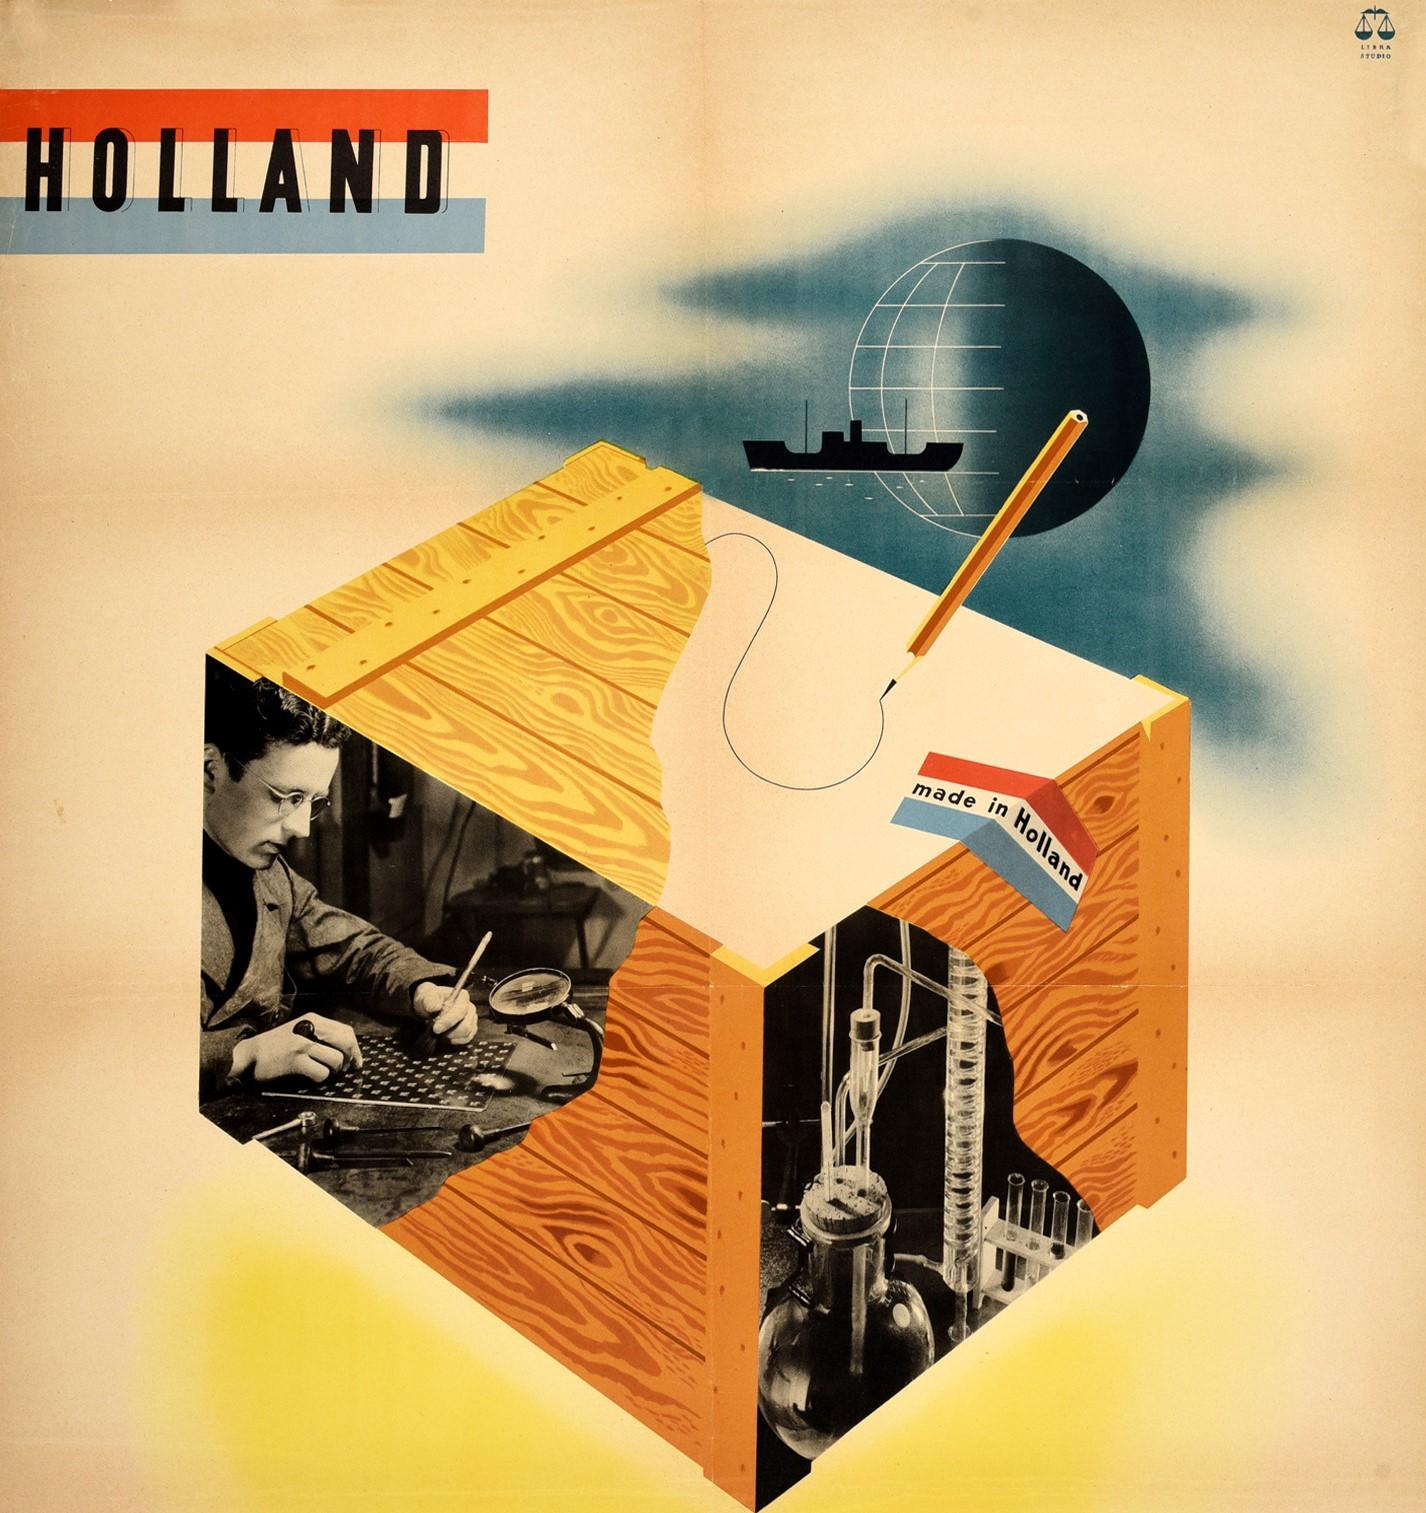 Original Vintage Poster Holland Science Art And Craftsmanship Netherlands Export - Print by Unknown